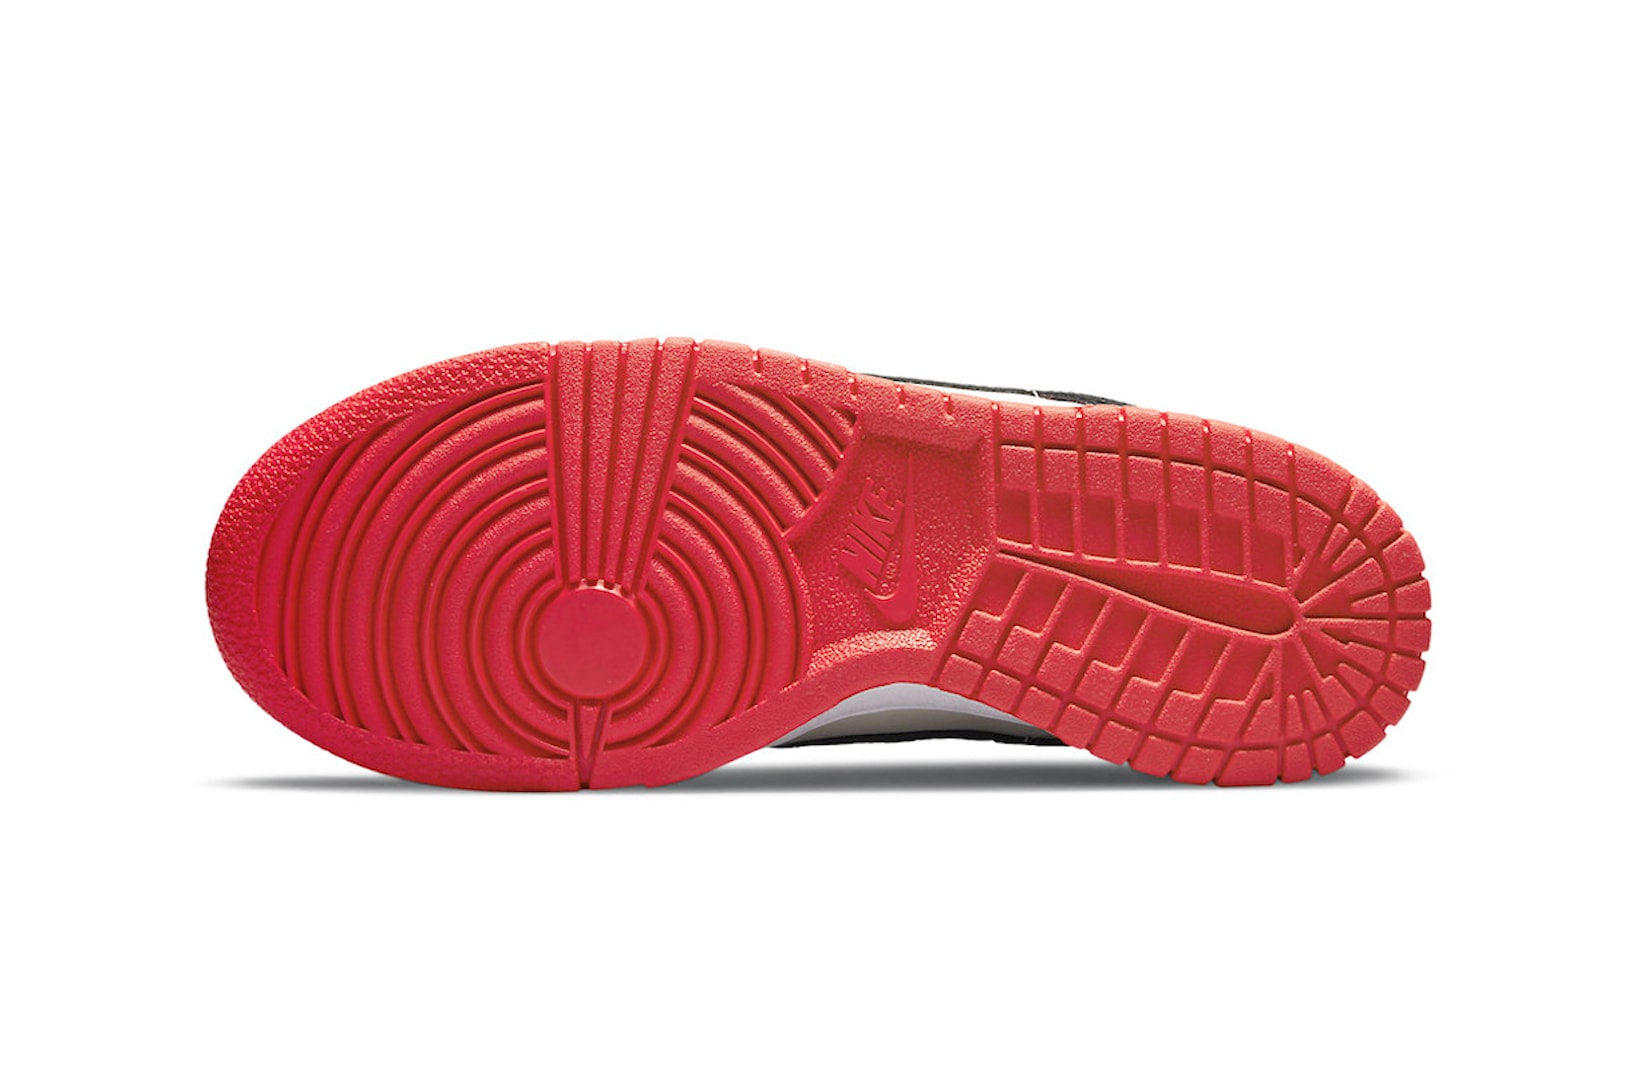 NBA Nike Dunk Low EMB Chicago Red Black White Sneakers Footwear Shoes Kicks Sole